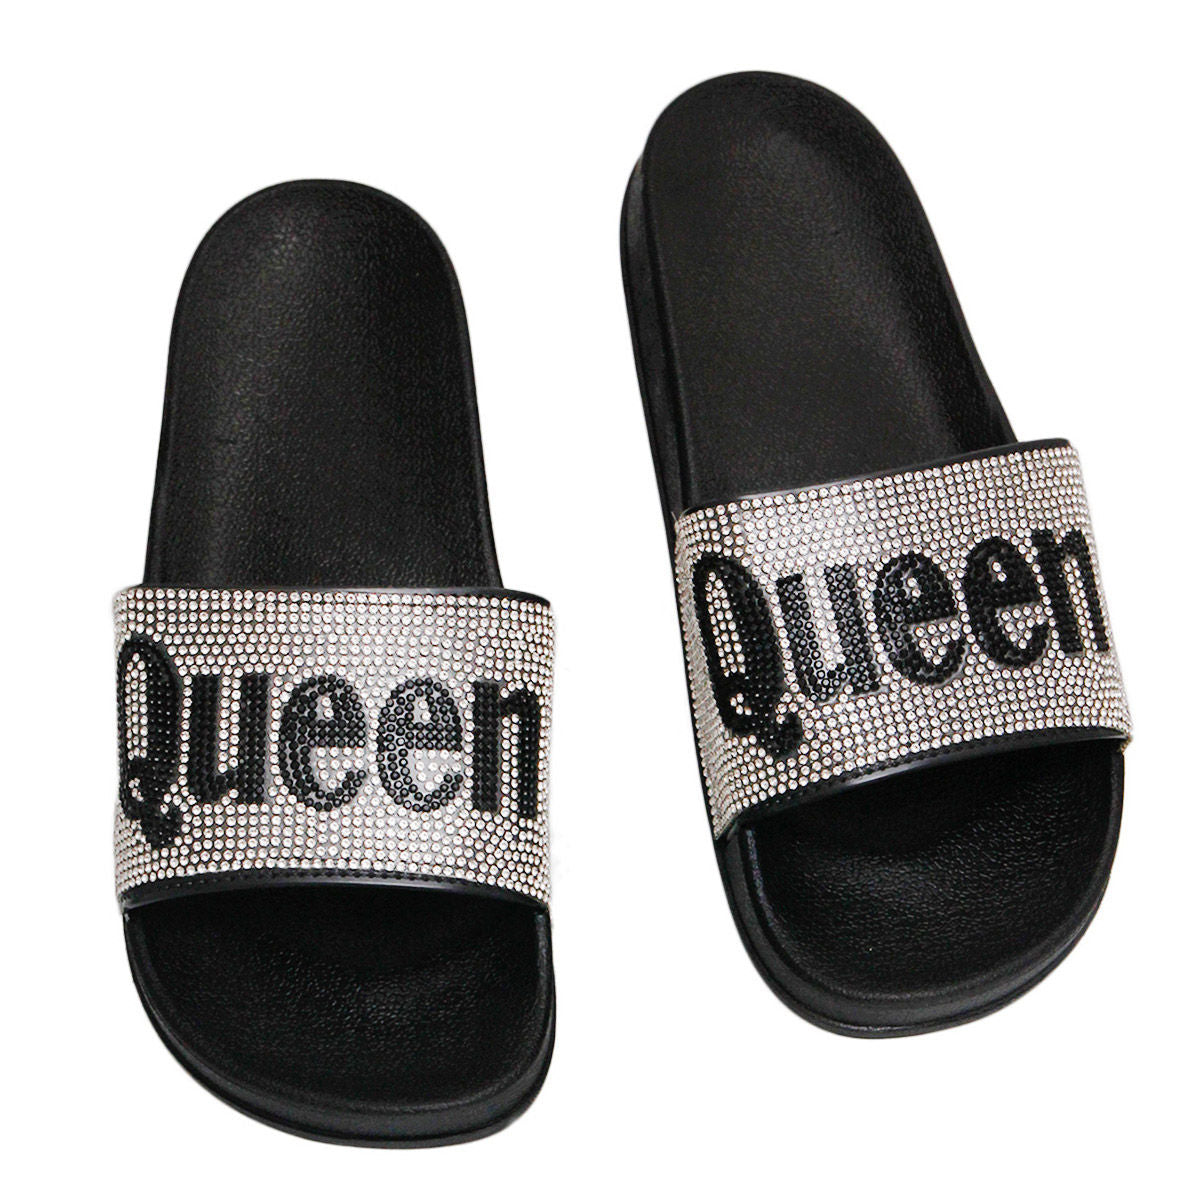 Size 12 Queen Silver Slides